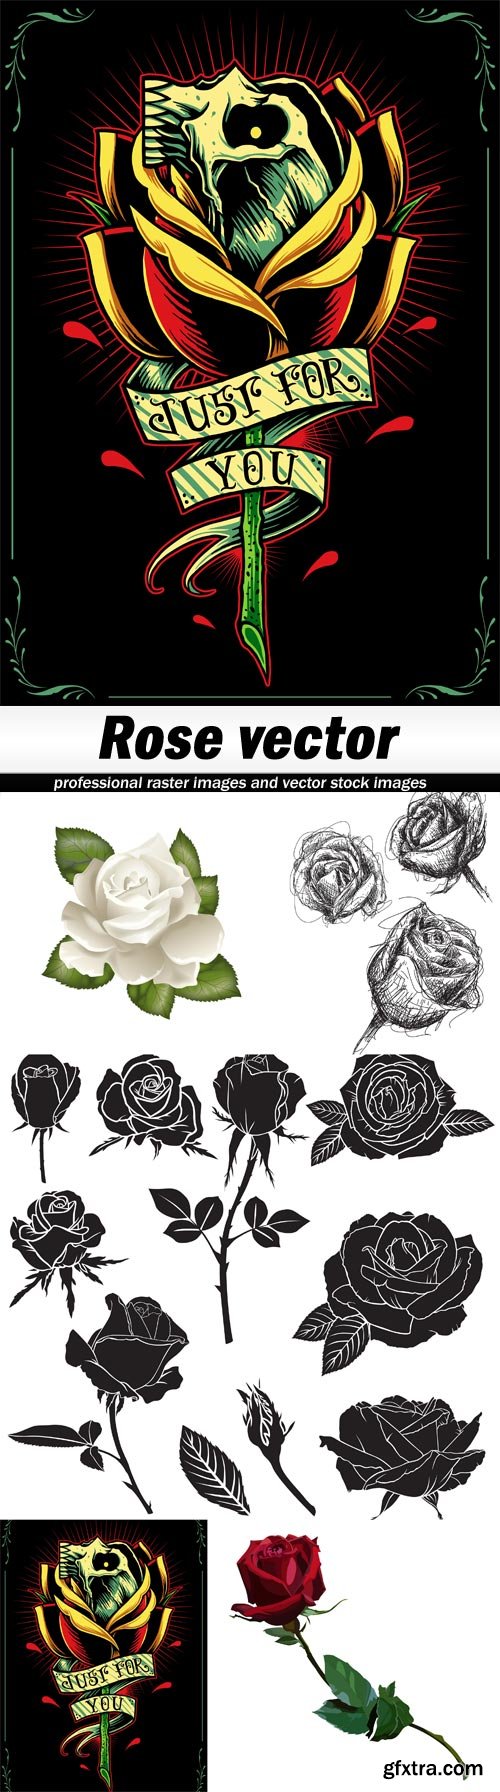 Rose vector